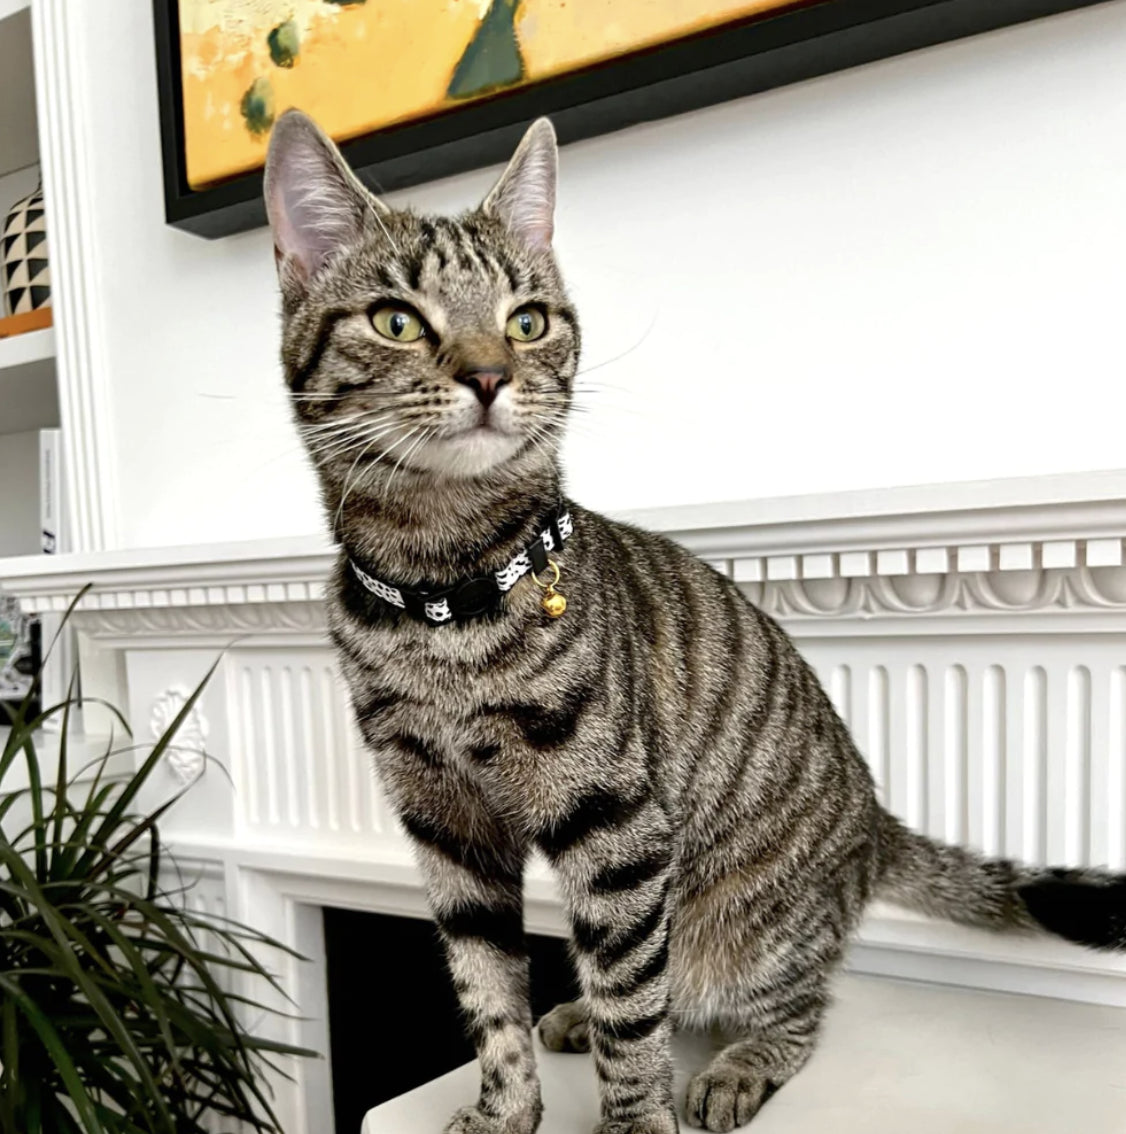 Cat Collar - Monochrome spots